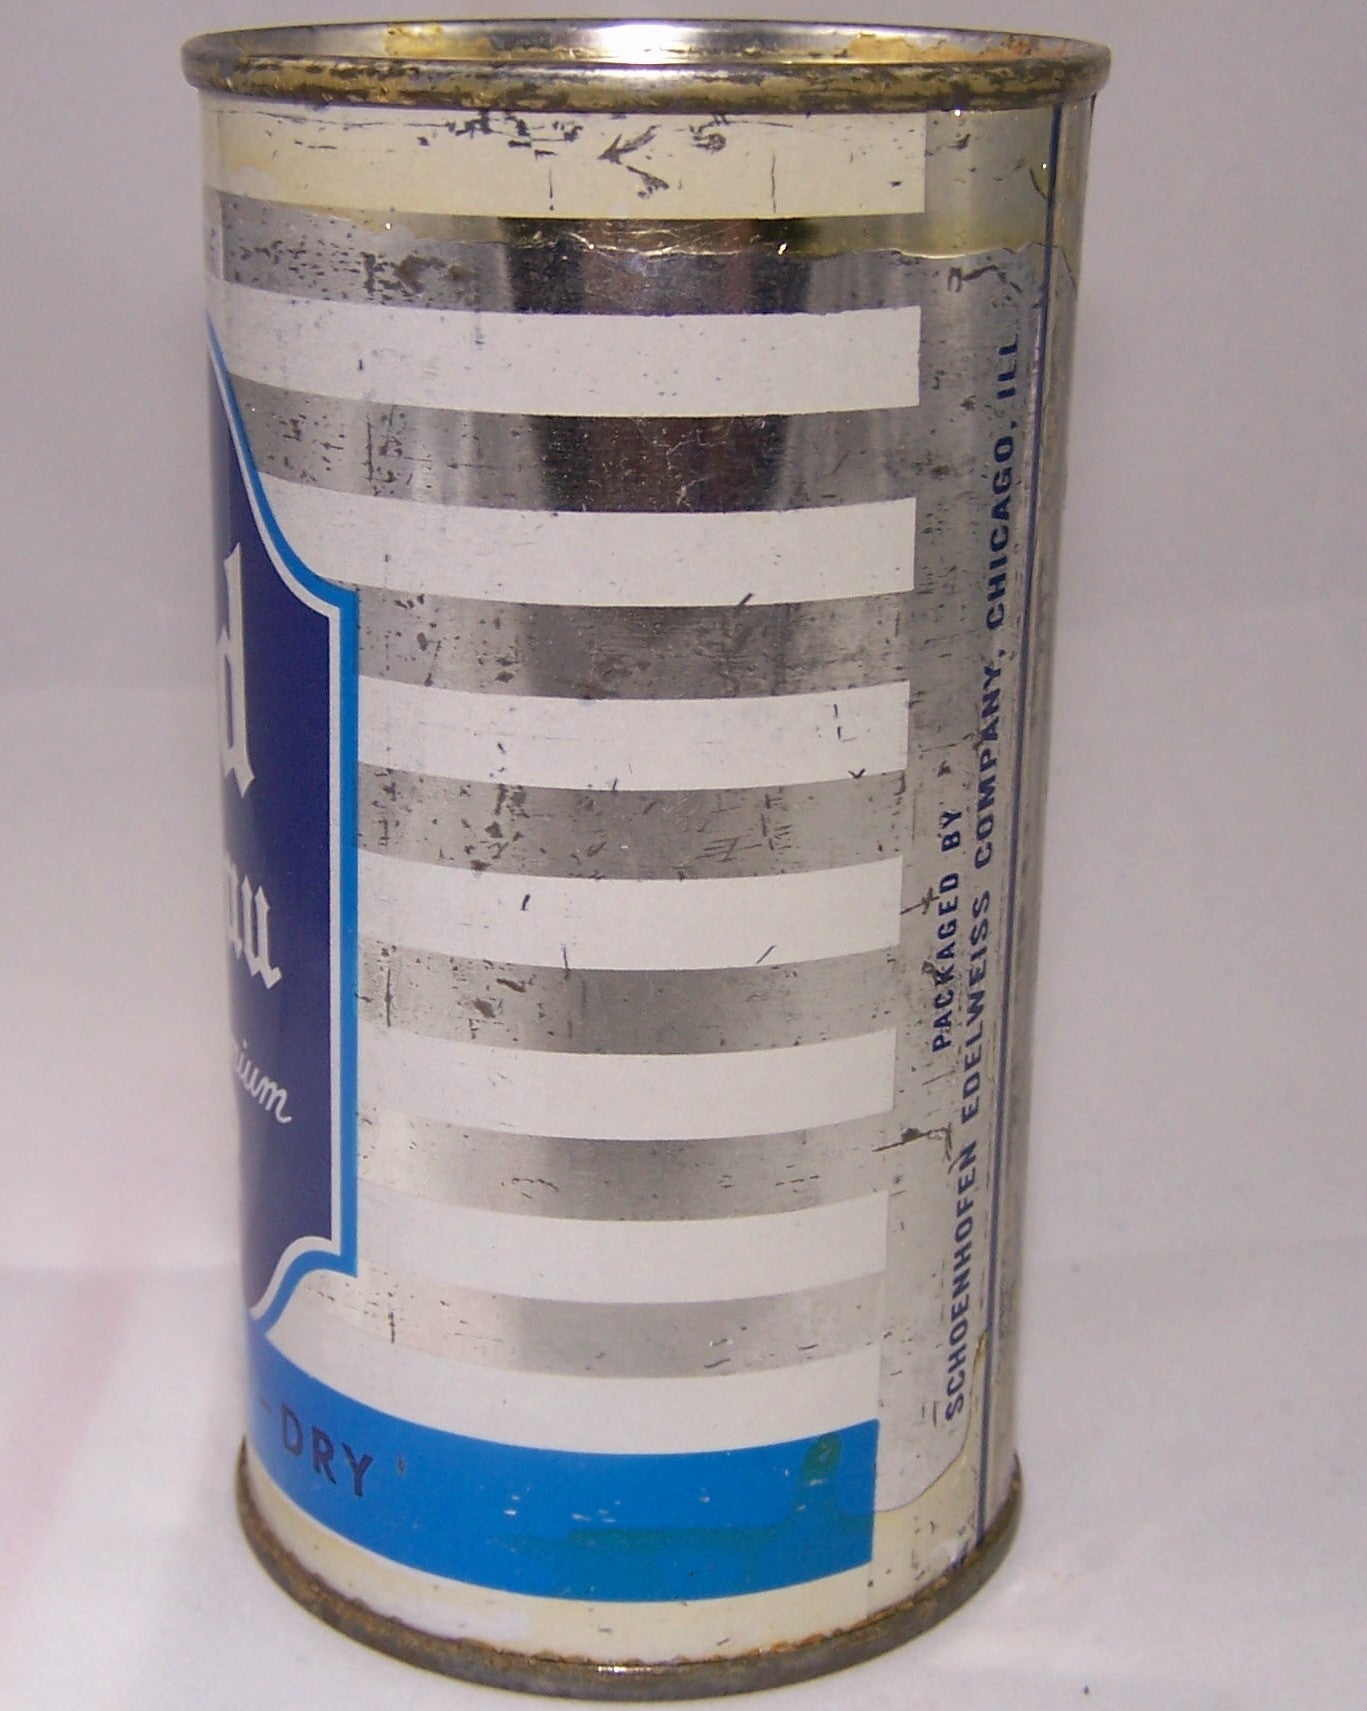 Kold Brau Eastern Premium Beer, USBC 89-16, Grade 1/1-sold blue gray